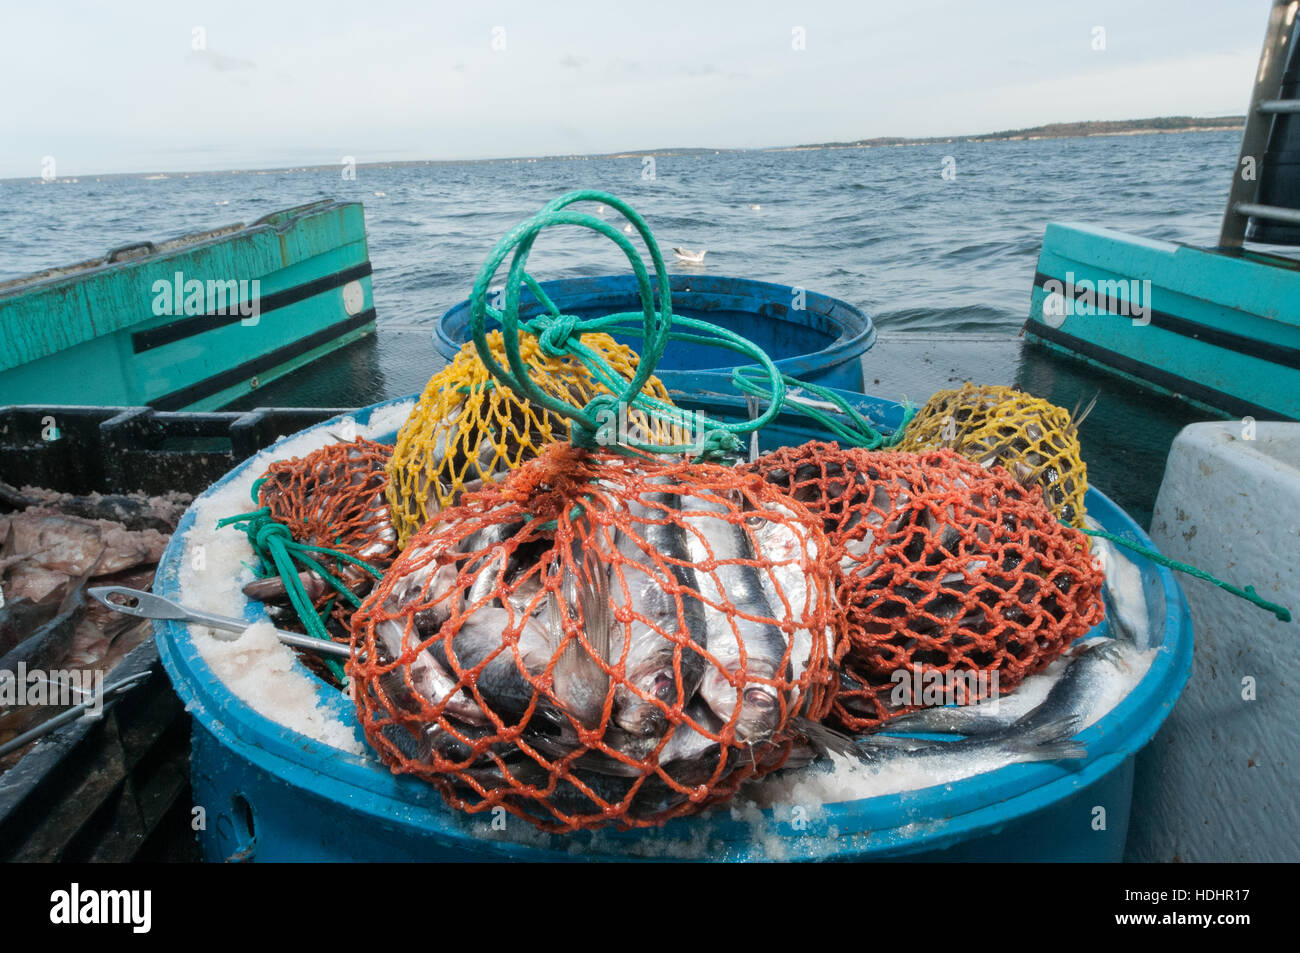 https://c8.alamy.com/comp/HDHR17/lobster-bait-bags-full-of-herring-yarmouth-me-HDHR17.jpg